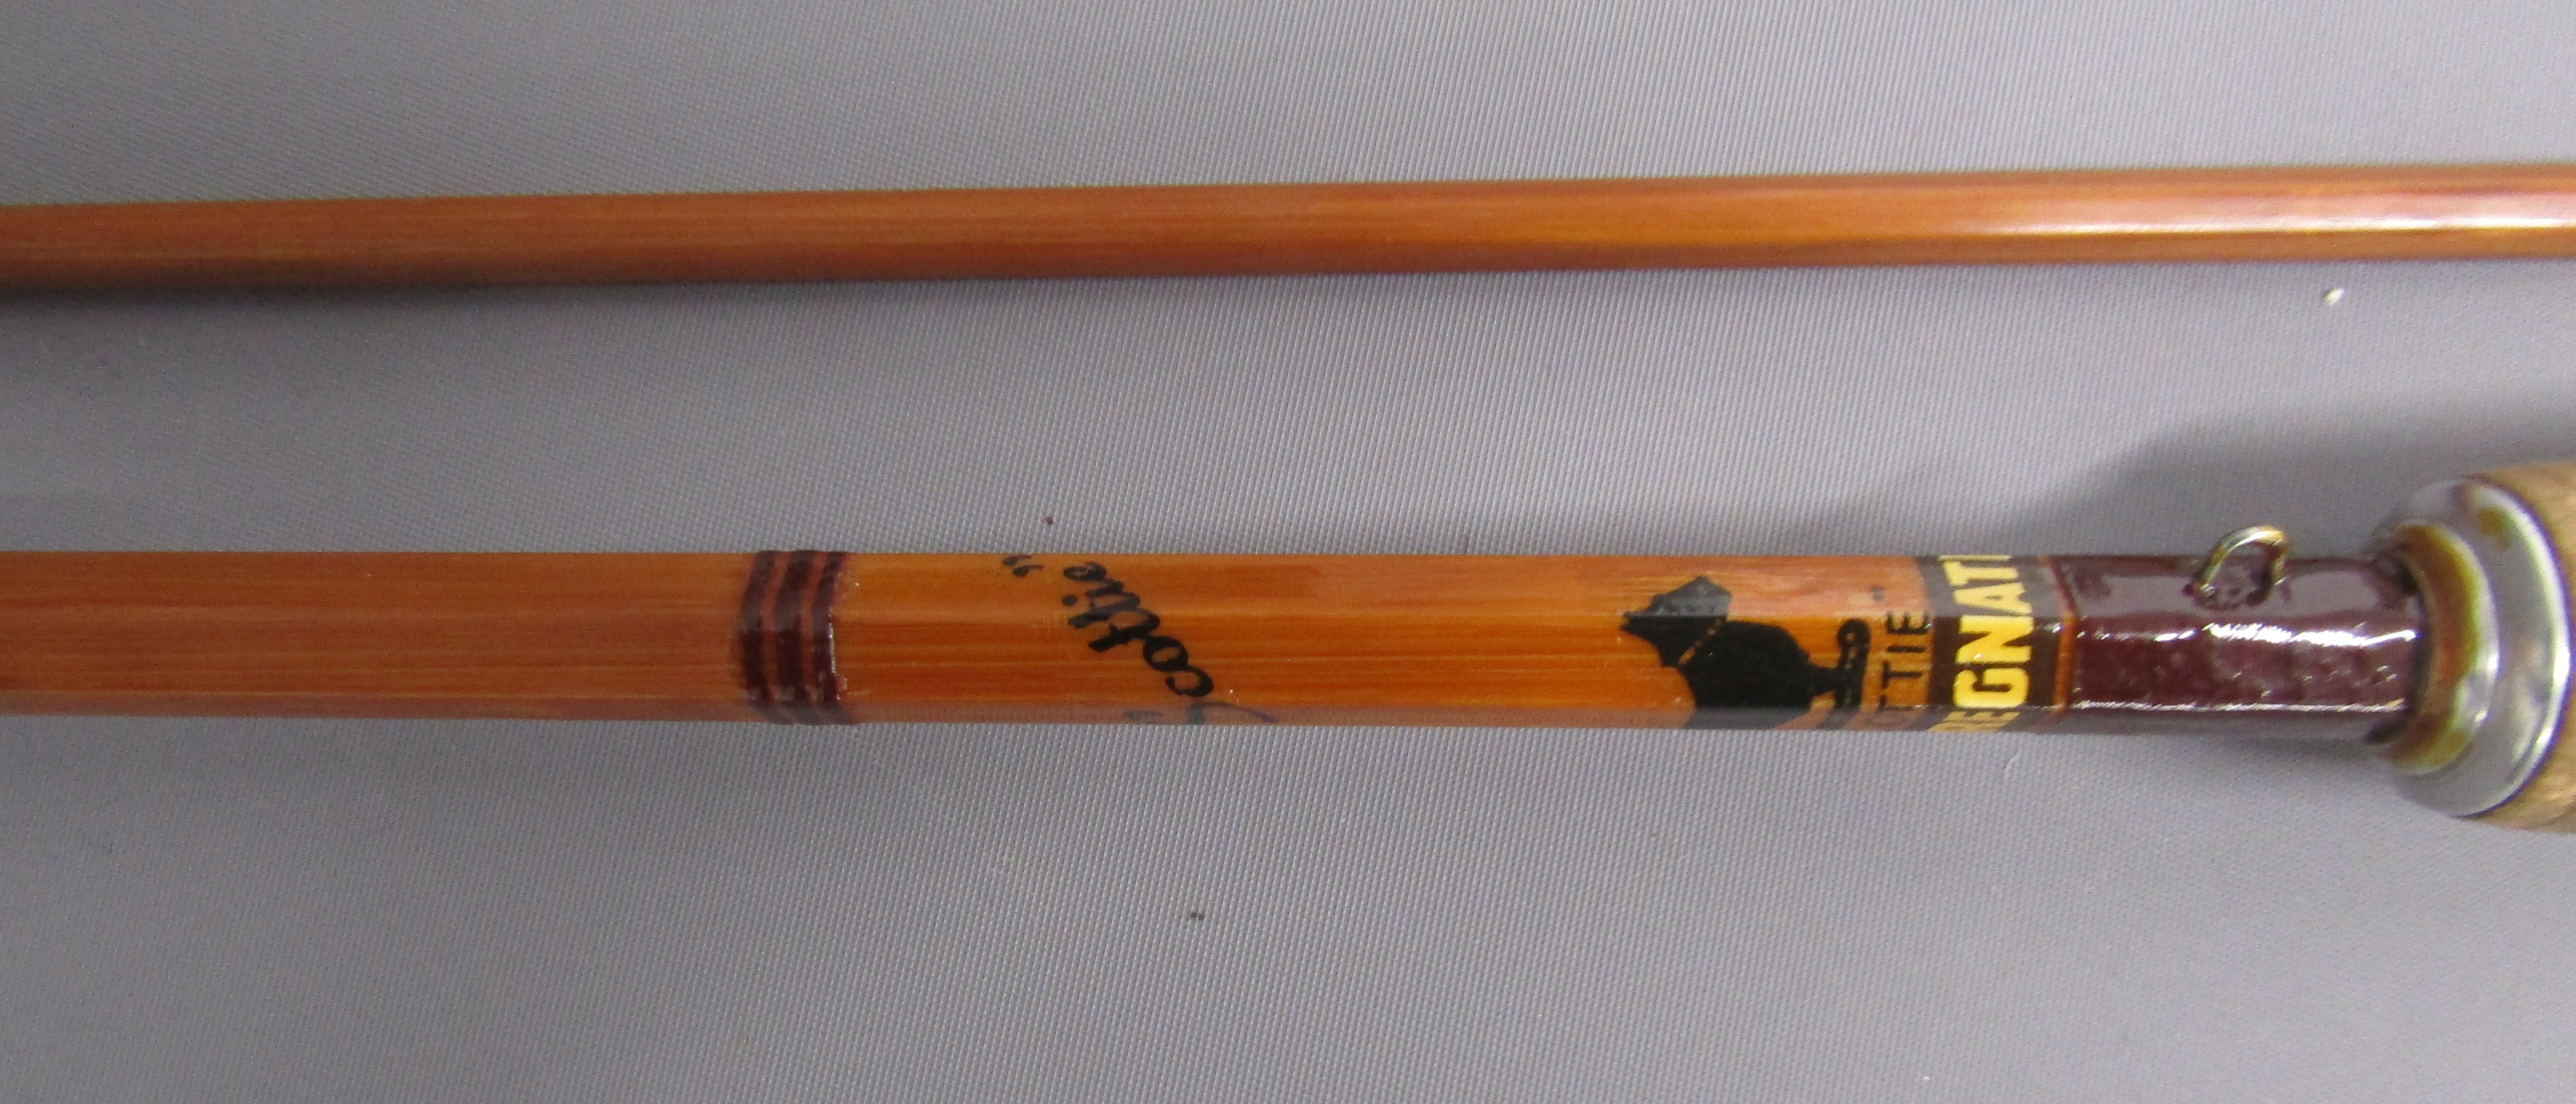 2 x J S Sharpe Ltd Aberdeen 'Scottie' split cane fishing rods - 2 piece 10ft screw joint includes - Image 8 of 9